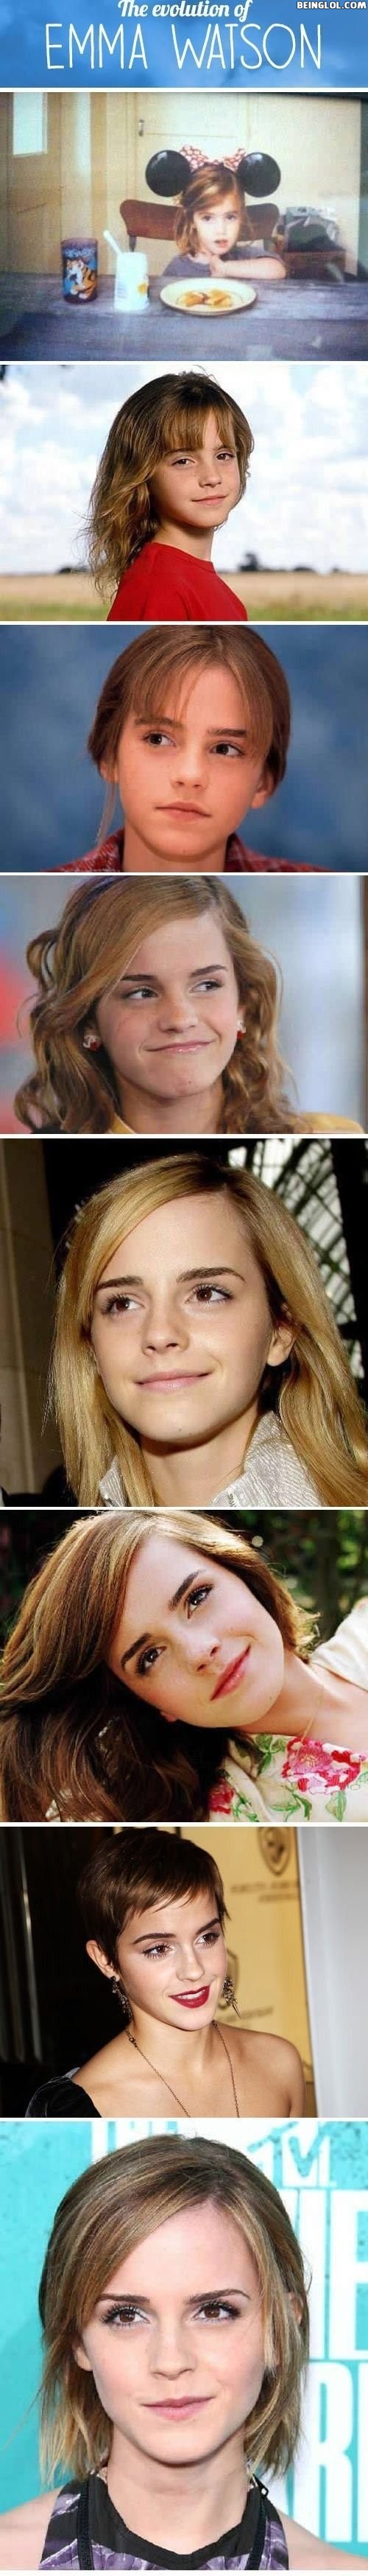 The Evolution of Emma Watson